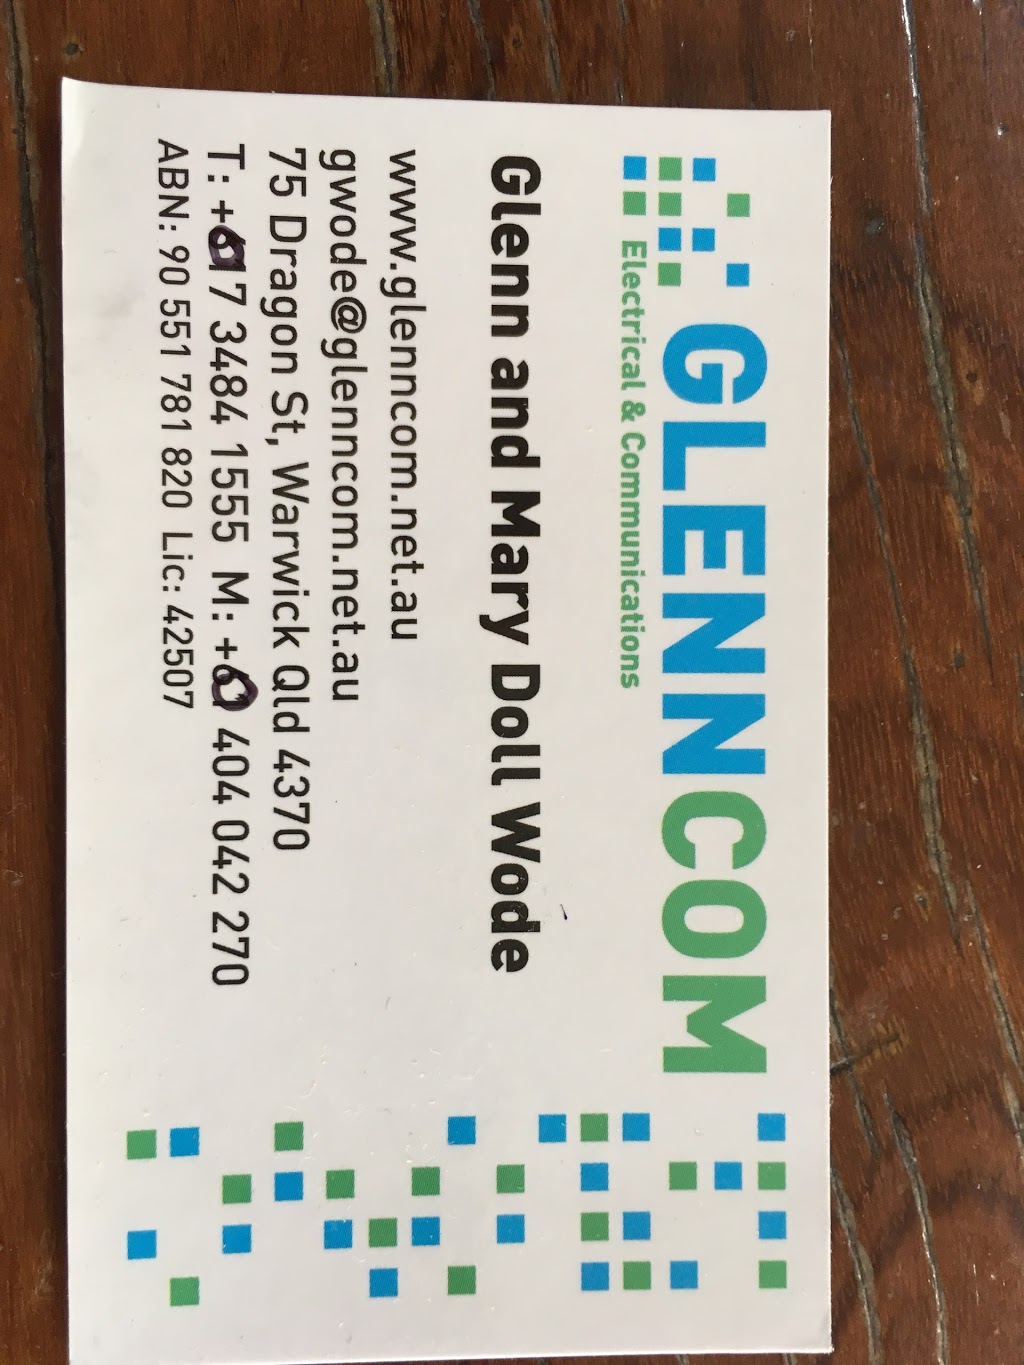 Glenn Com | electrician | 75 Dragon St, Warwick QLD 4370, Australia | 0404042270 OR +61 404 042 270